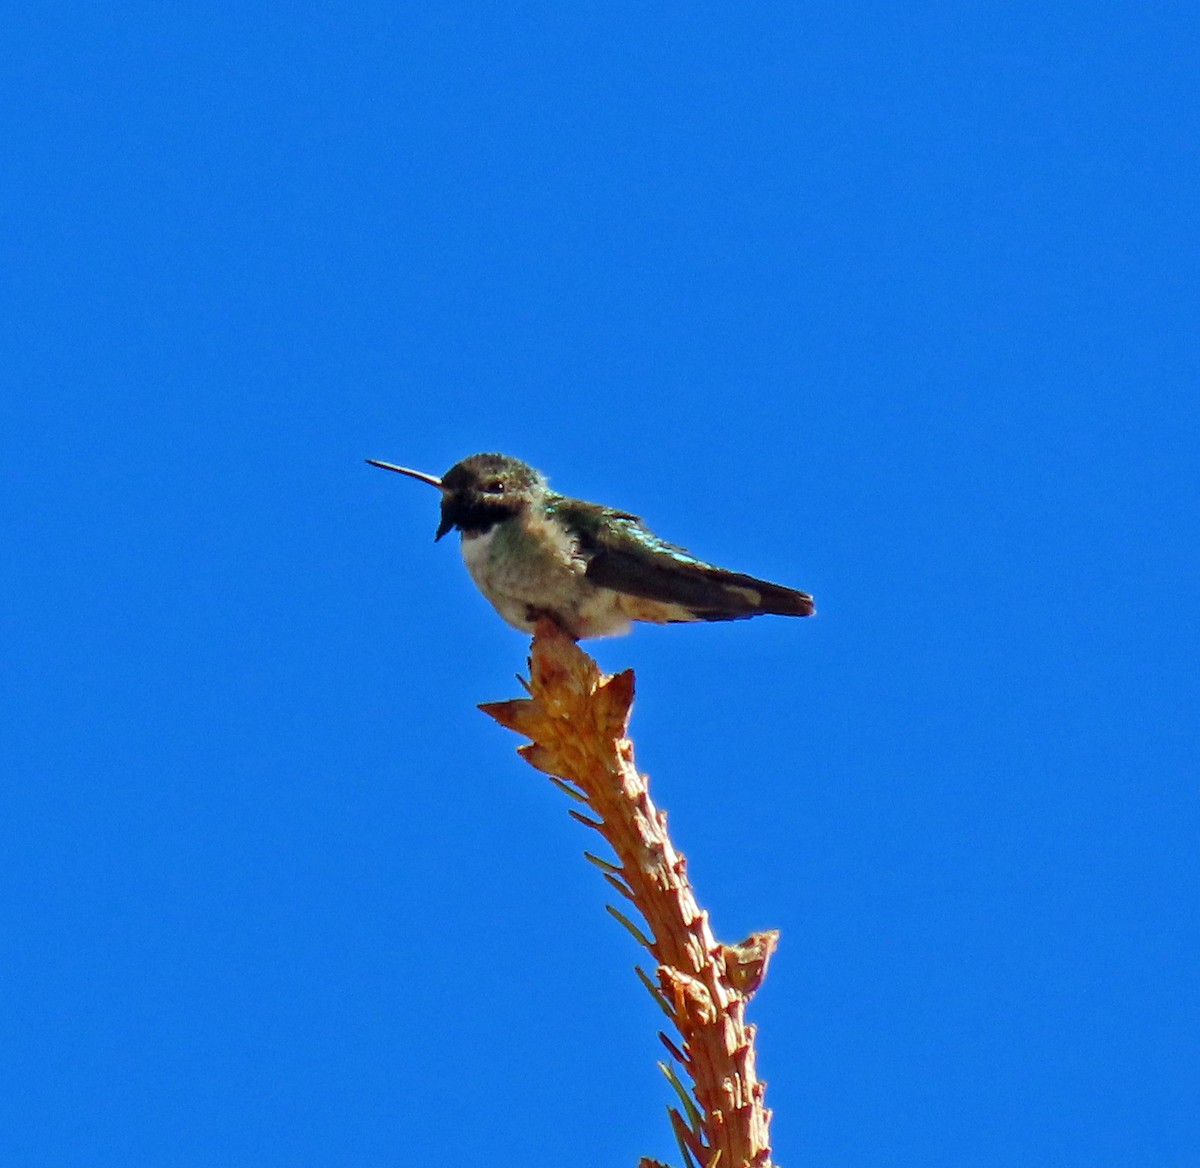 Broad-tailed Hummingbird - JoAnn Potter Riggle 🦤